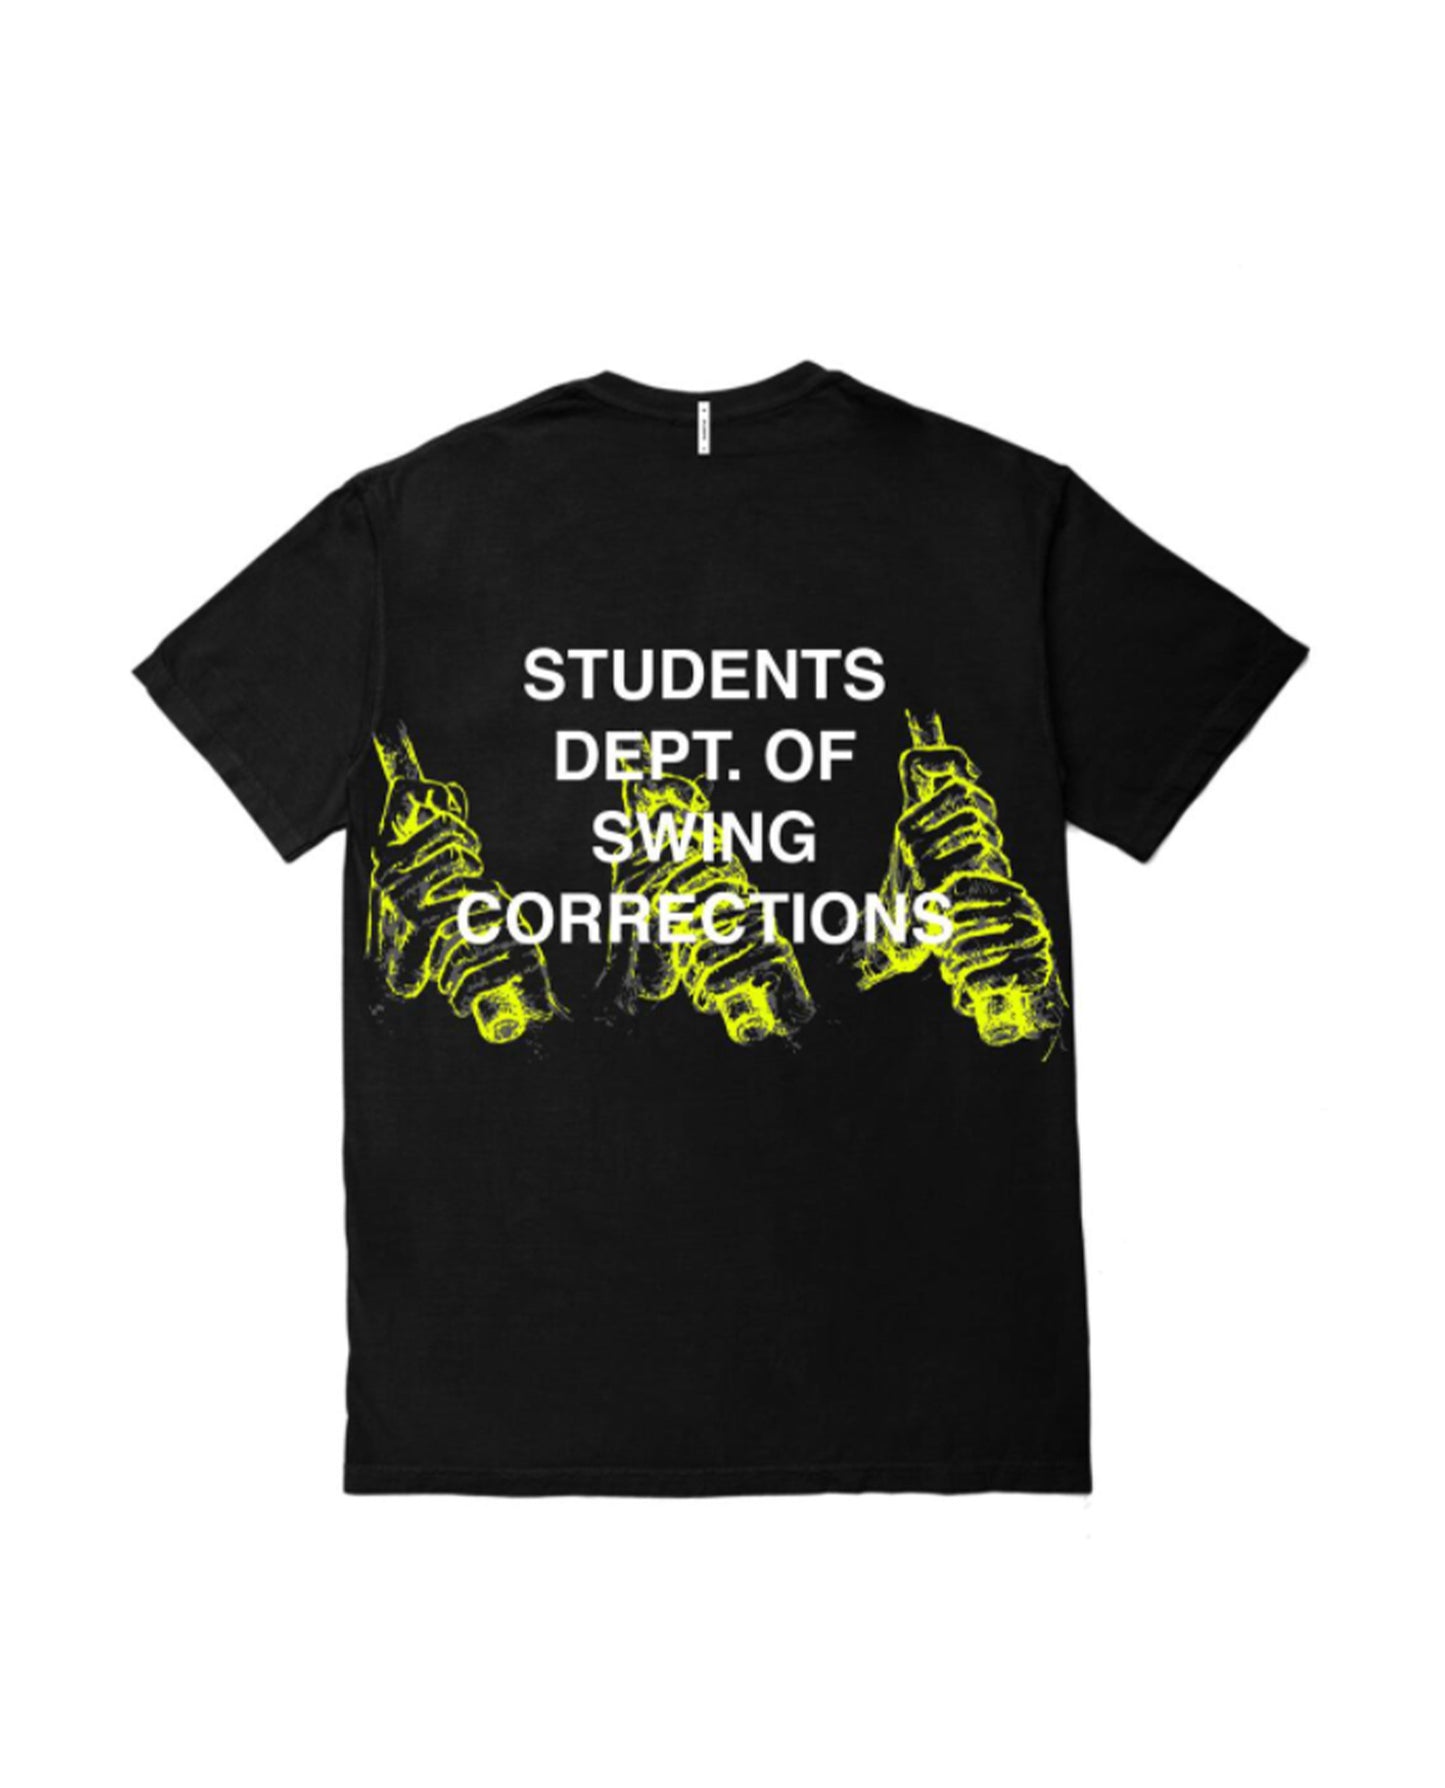 Students Dept Of Swing Corrections Tee Shirt Black